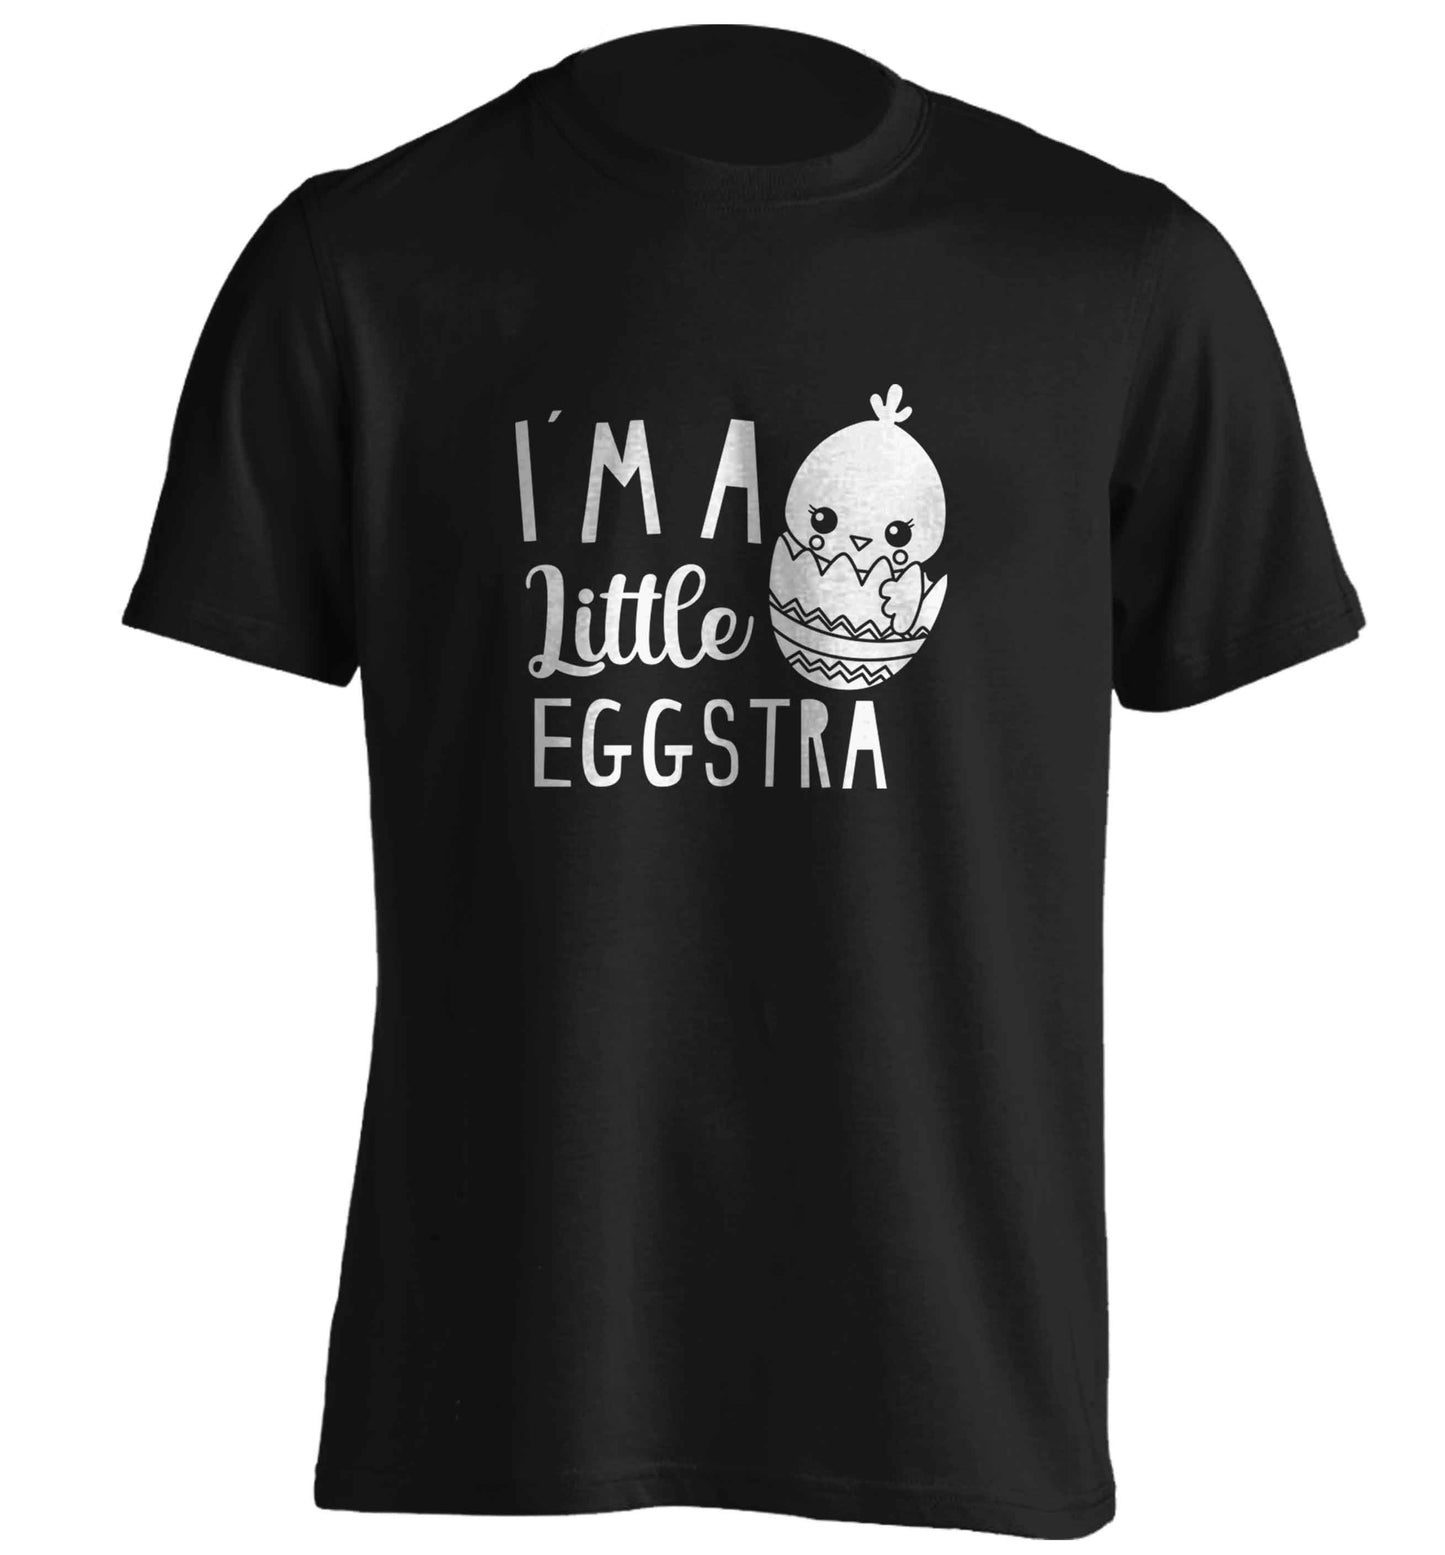 I'm a little eggstra adults unisex black Tshirt 2XL